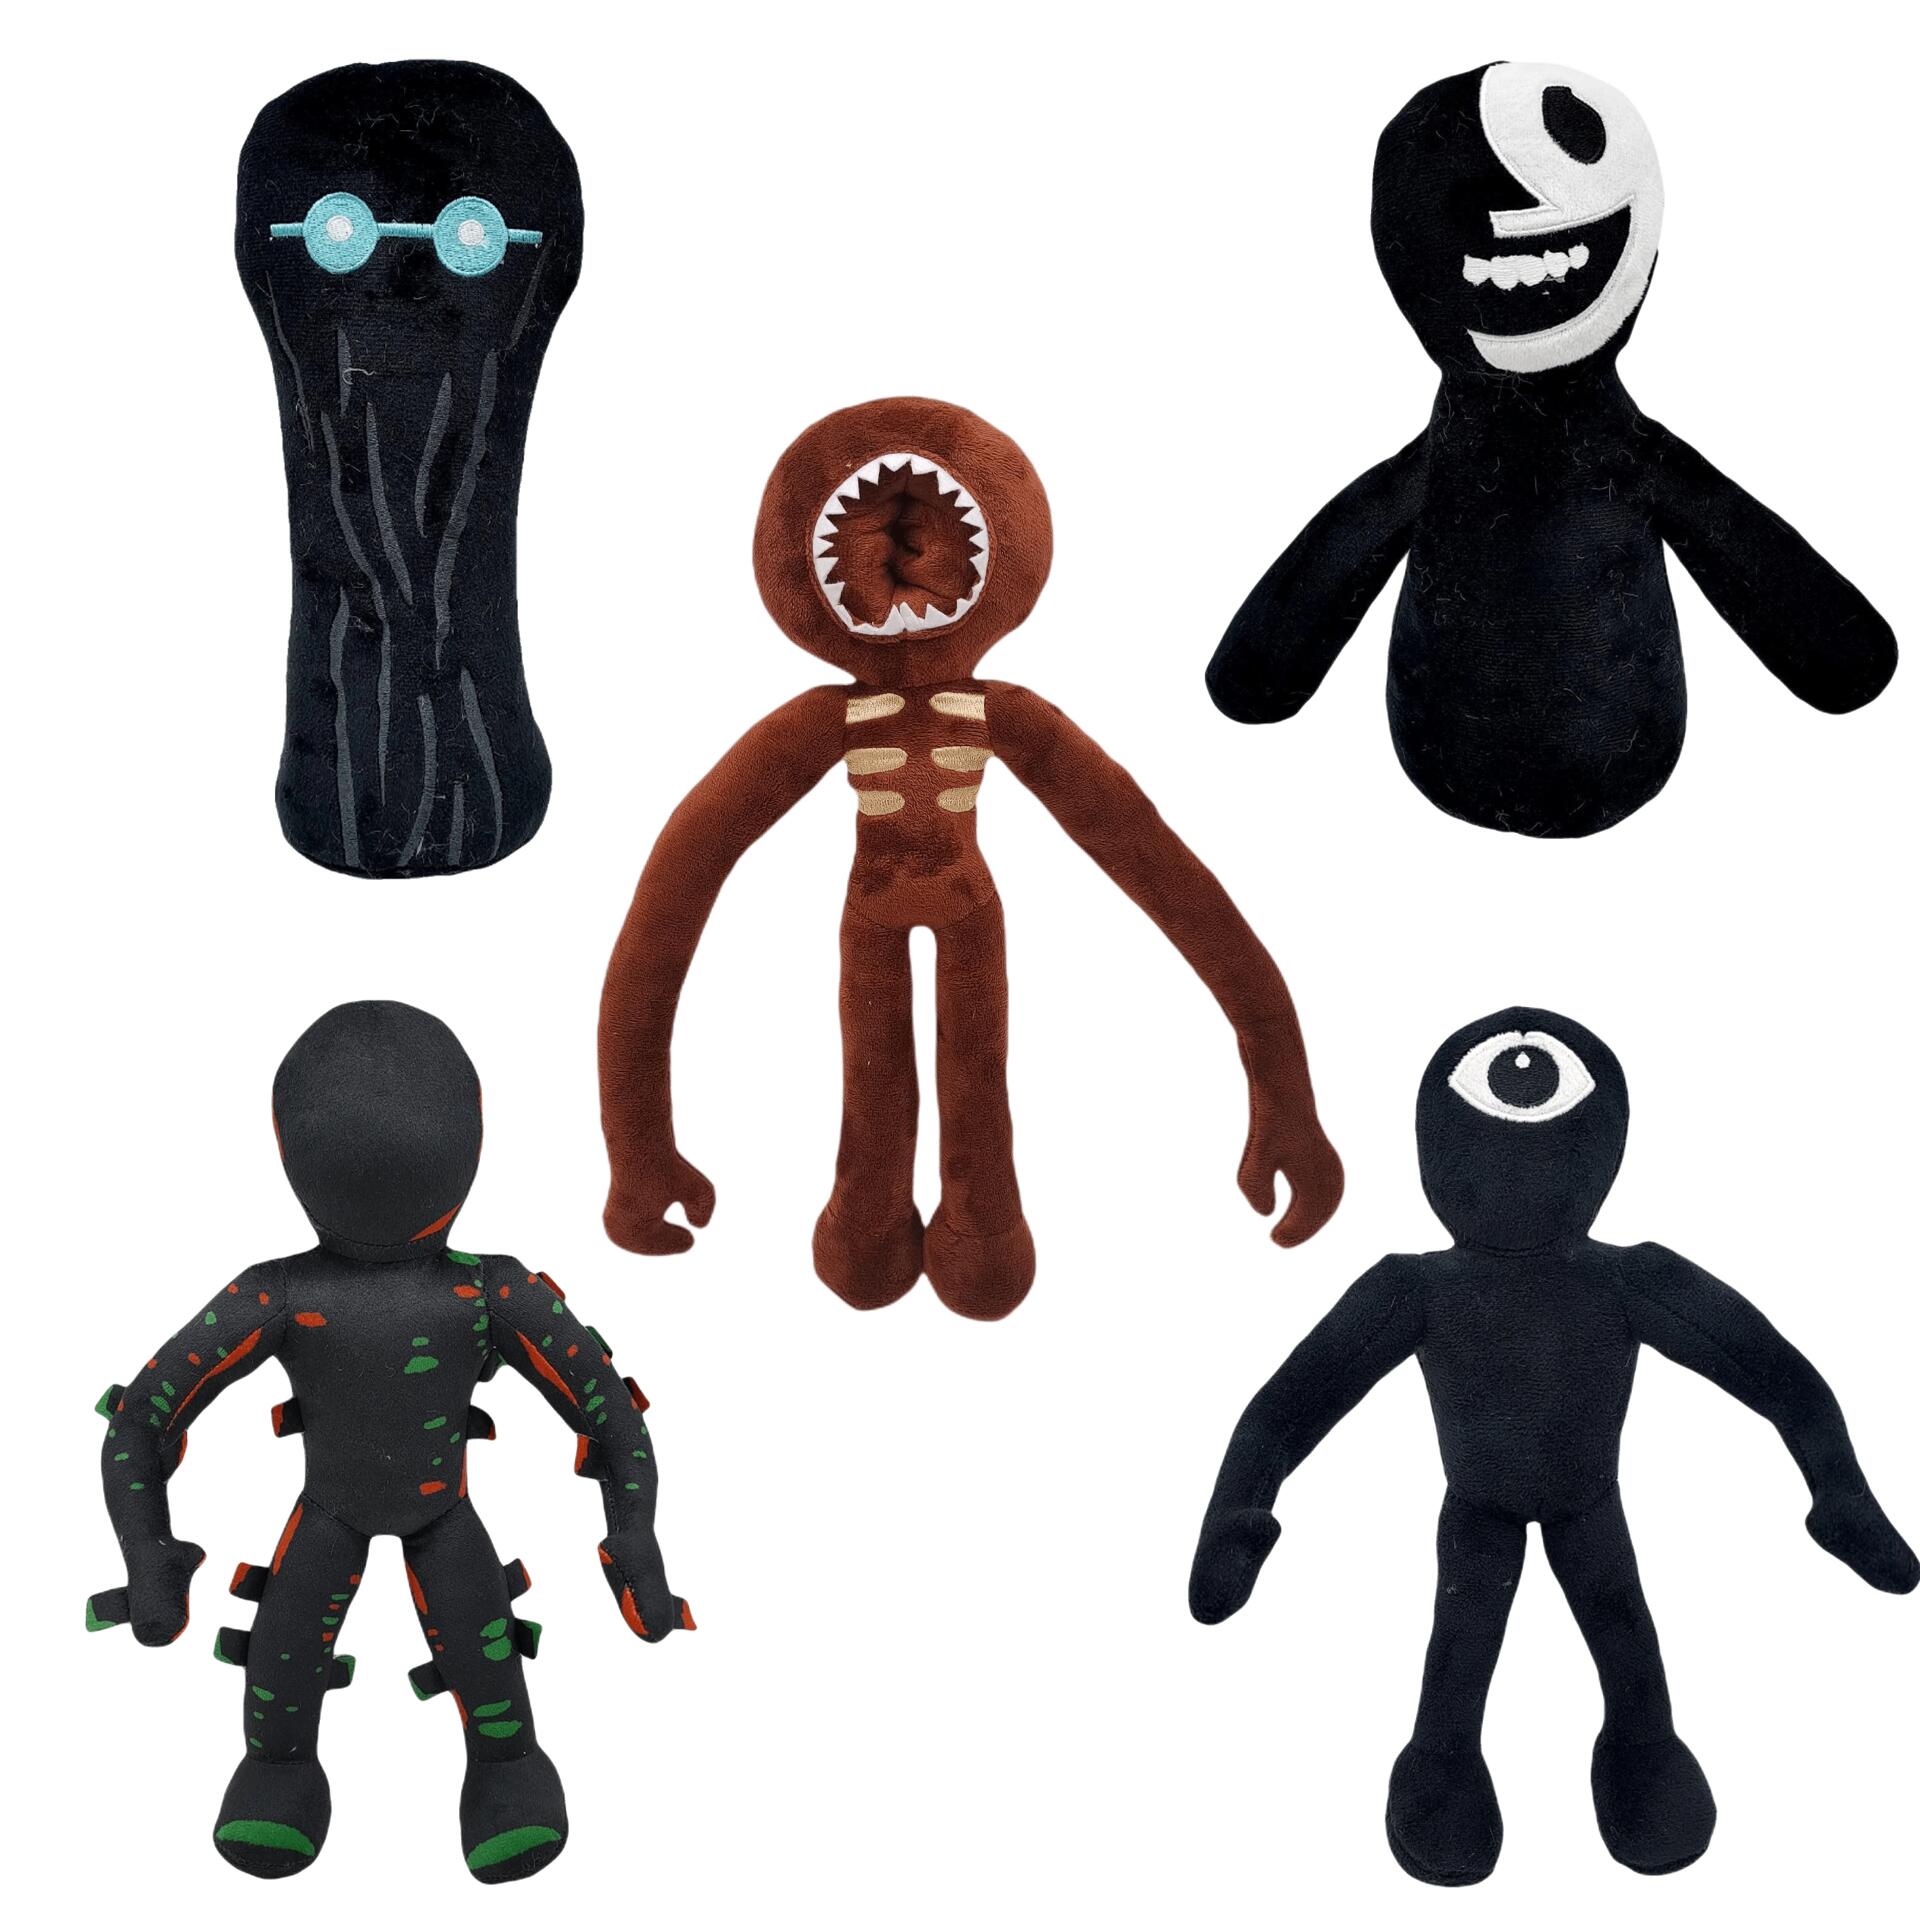 New Monster Horror Game Doors Plush Toy Stuffed Figure Doll